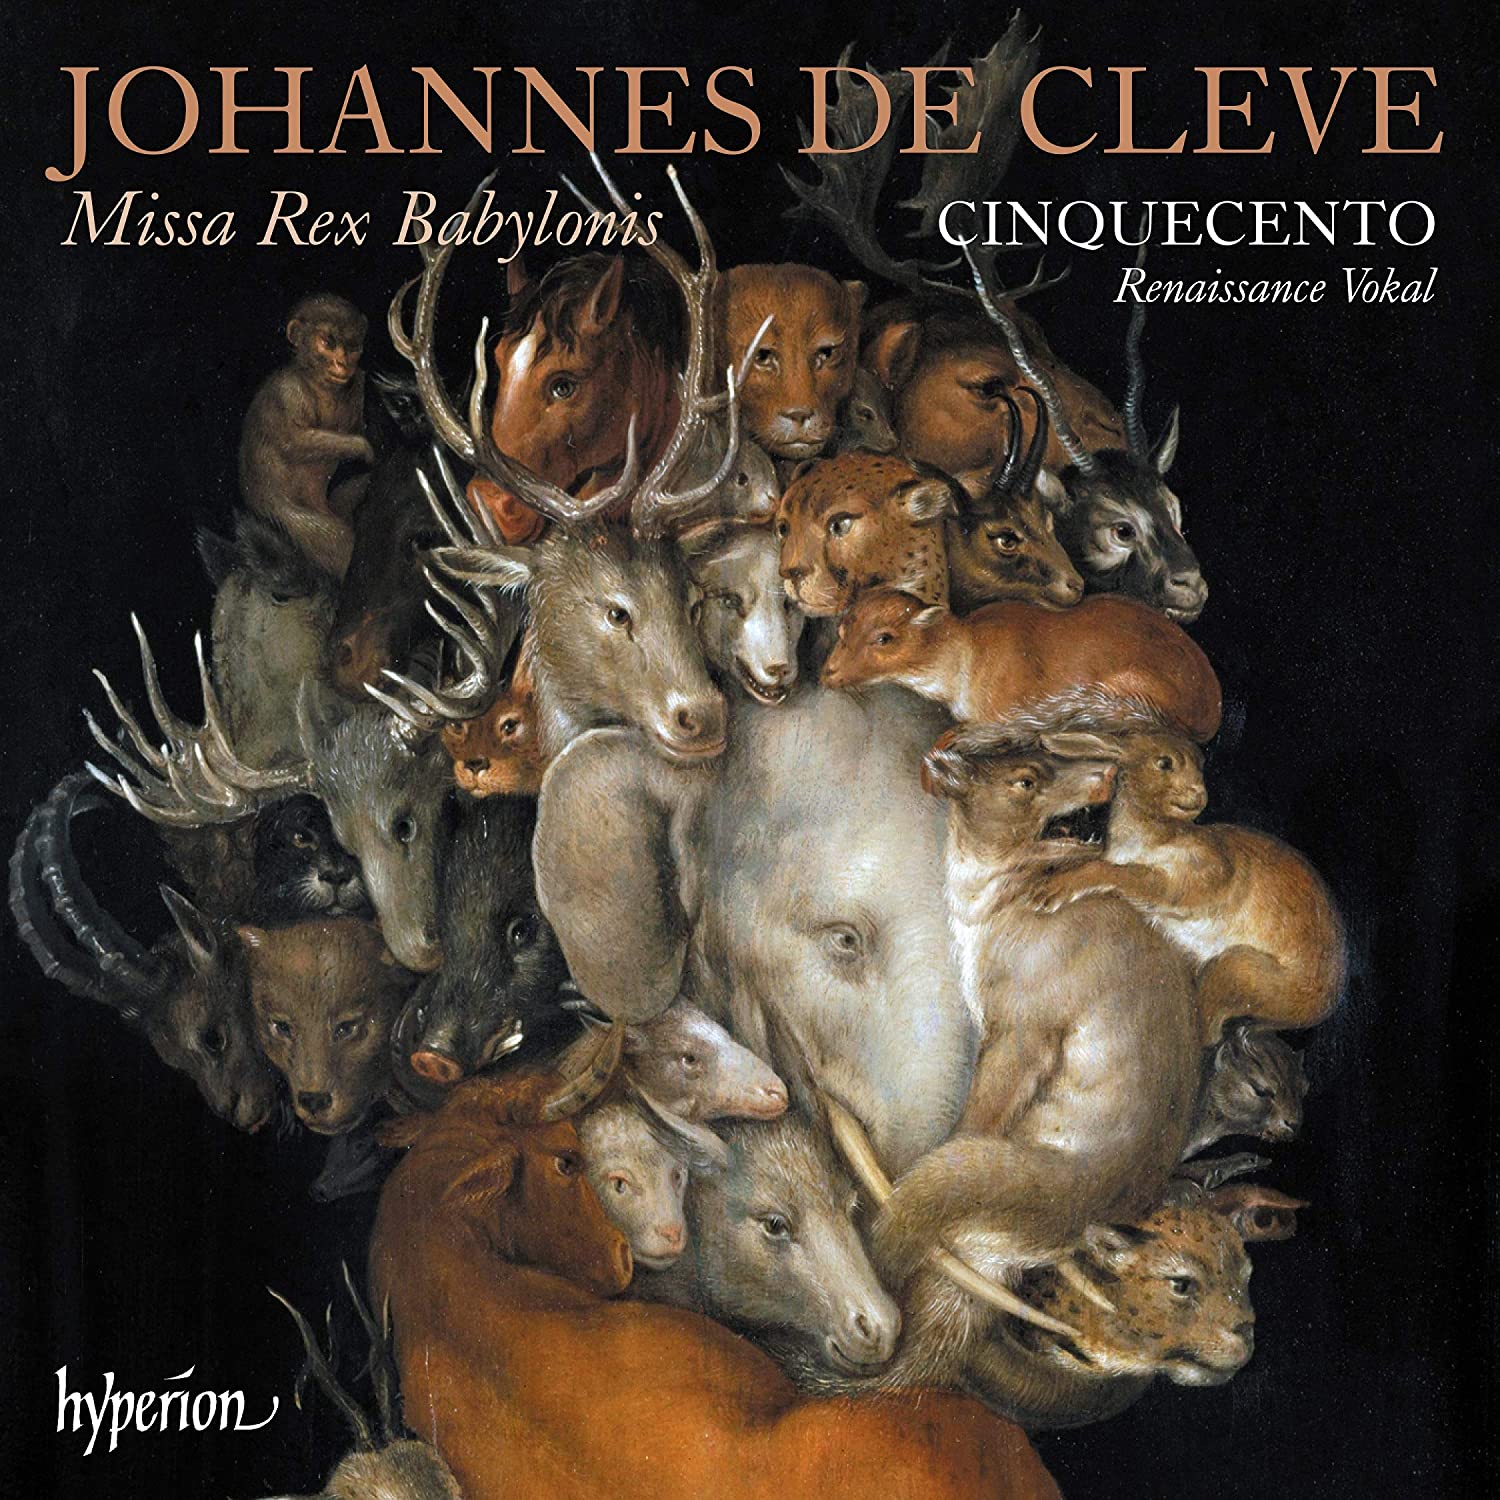 Cover of Cinquecento CD of de Cleve and Vaet